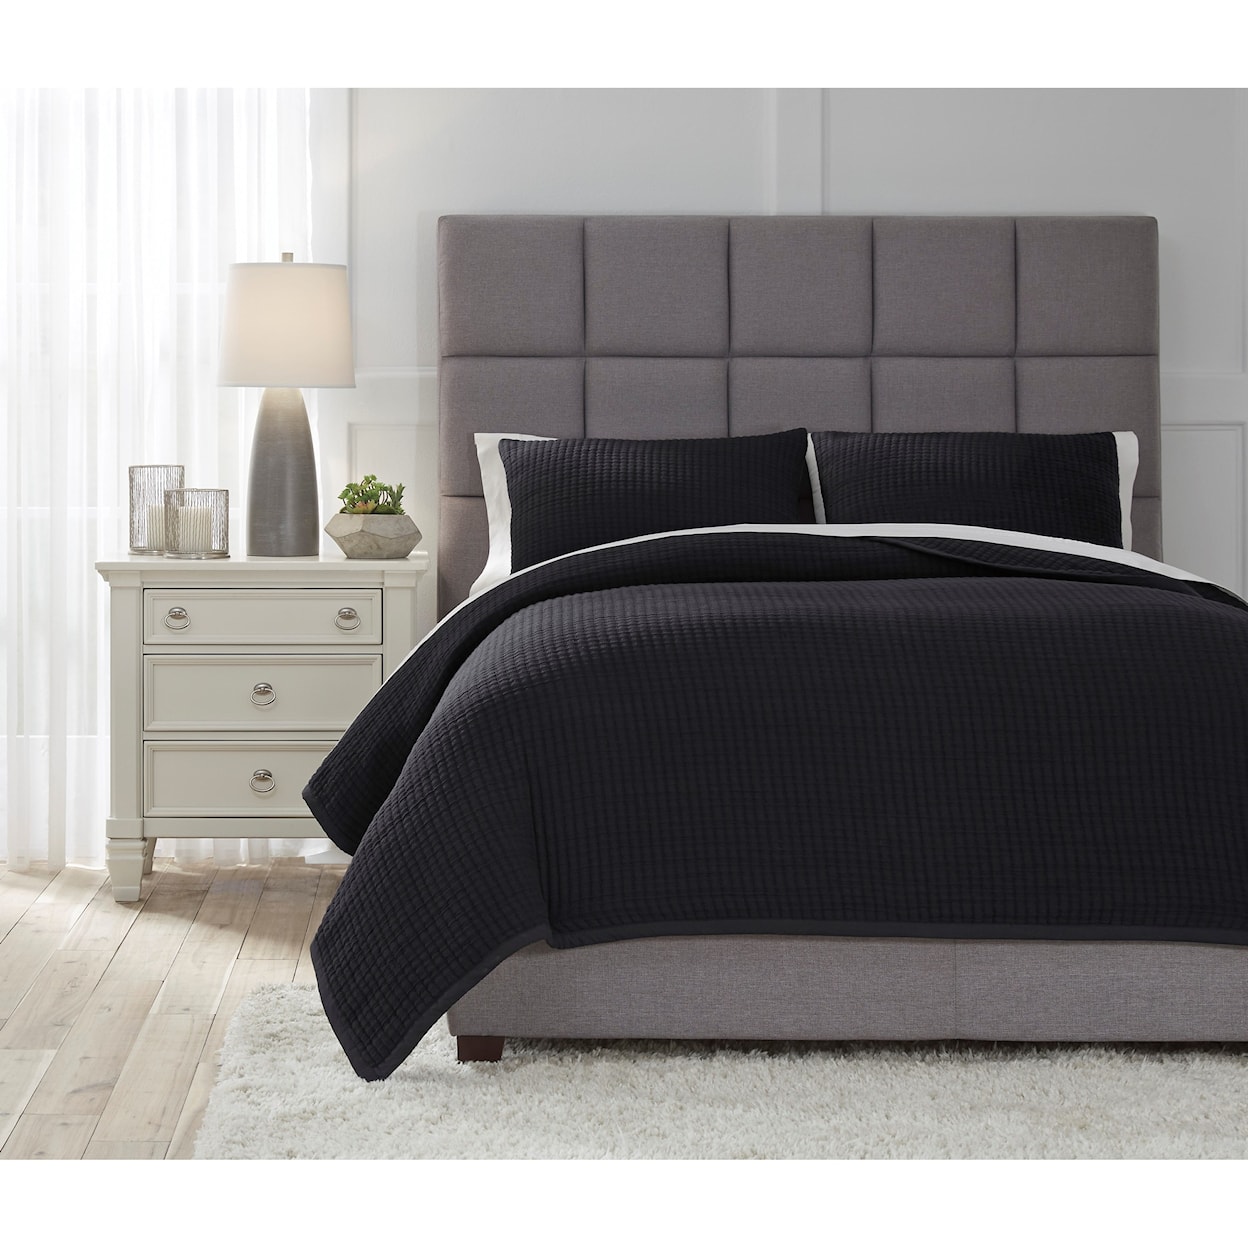 Ashley Furniture Signature Design Bedding Sets Queen Thornam Black Coverlet Set